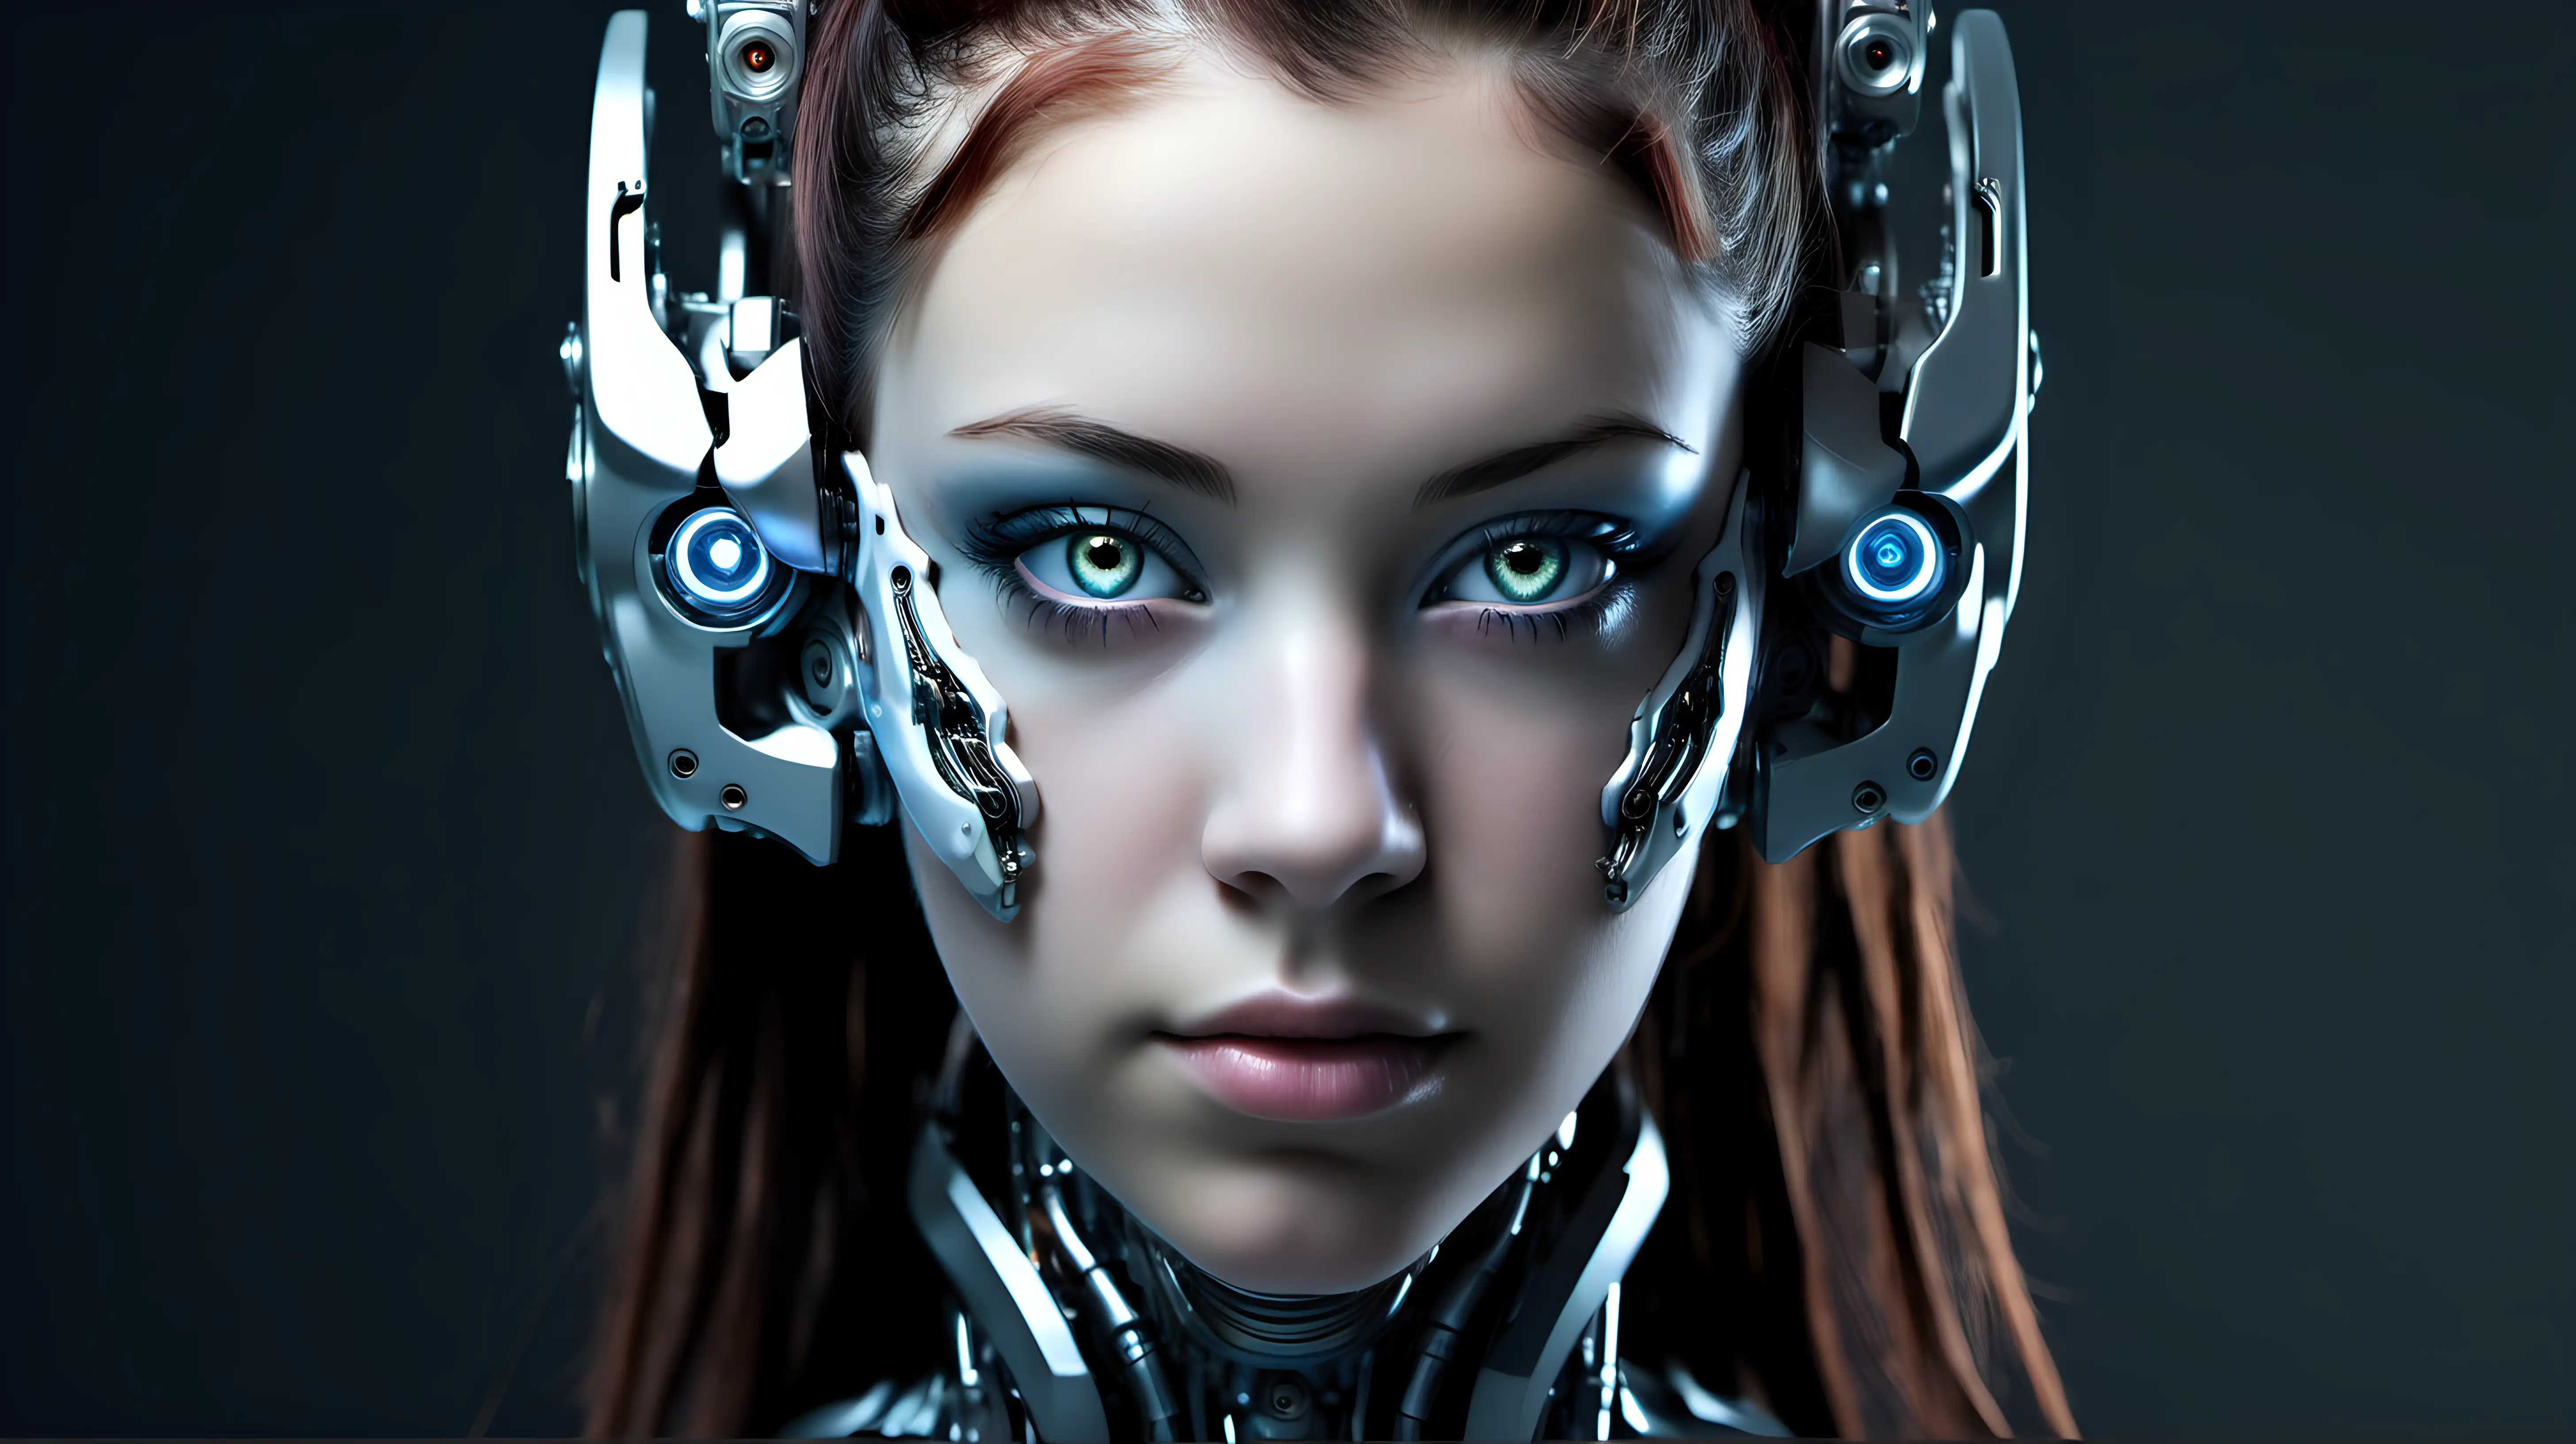 Beautiful Cyborg Woman with Natural Eyes Futuristic Elegance Captured